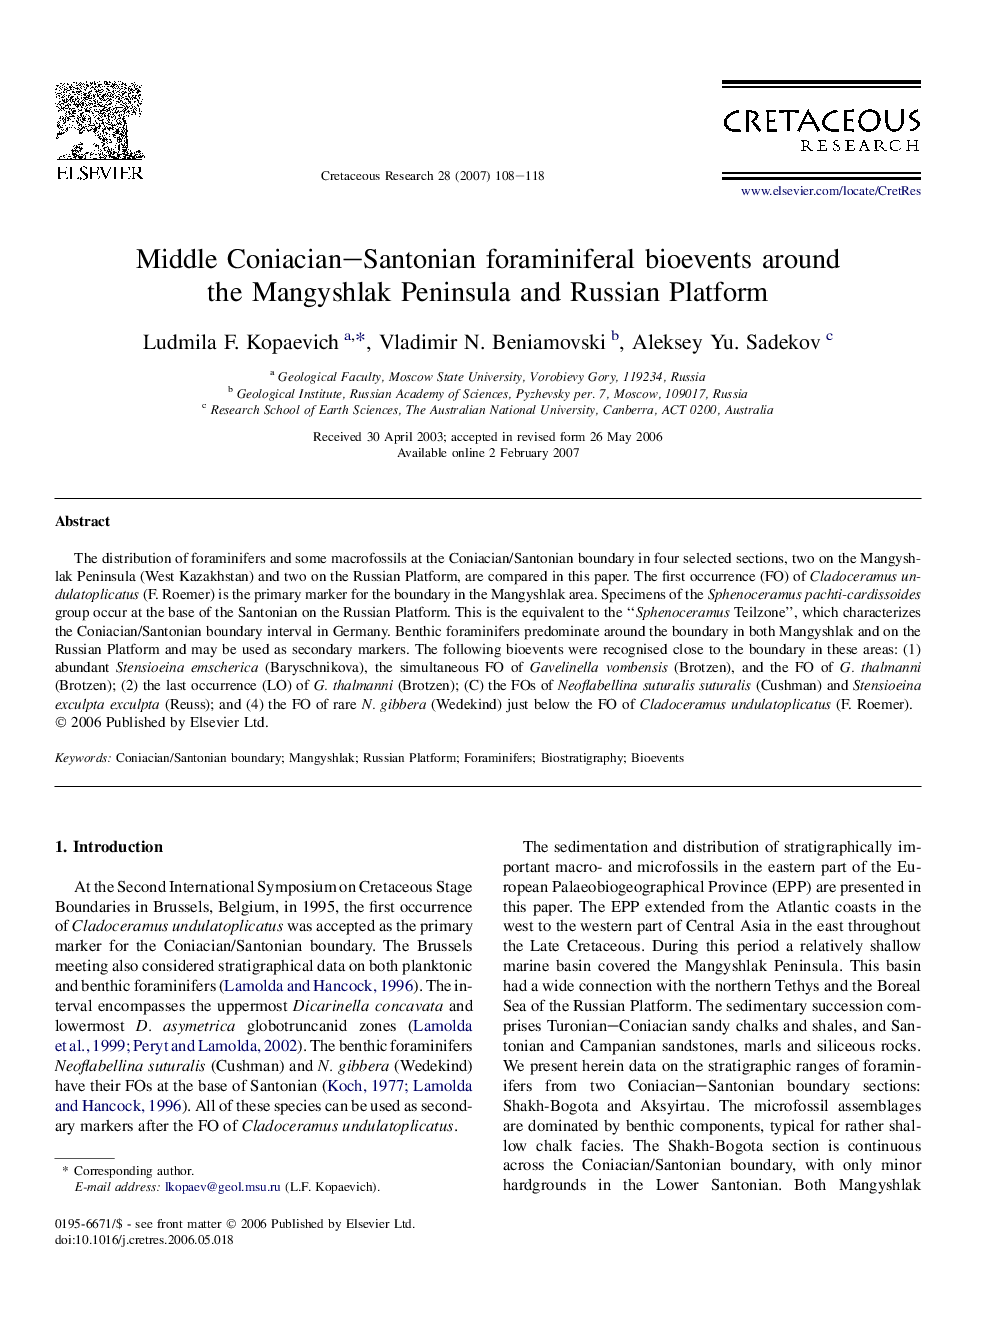 Middle Coniacian–Santonian foraminiferal bioevents around the Mangyshlak Peninsula and Russian Platform